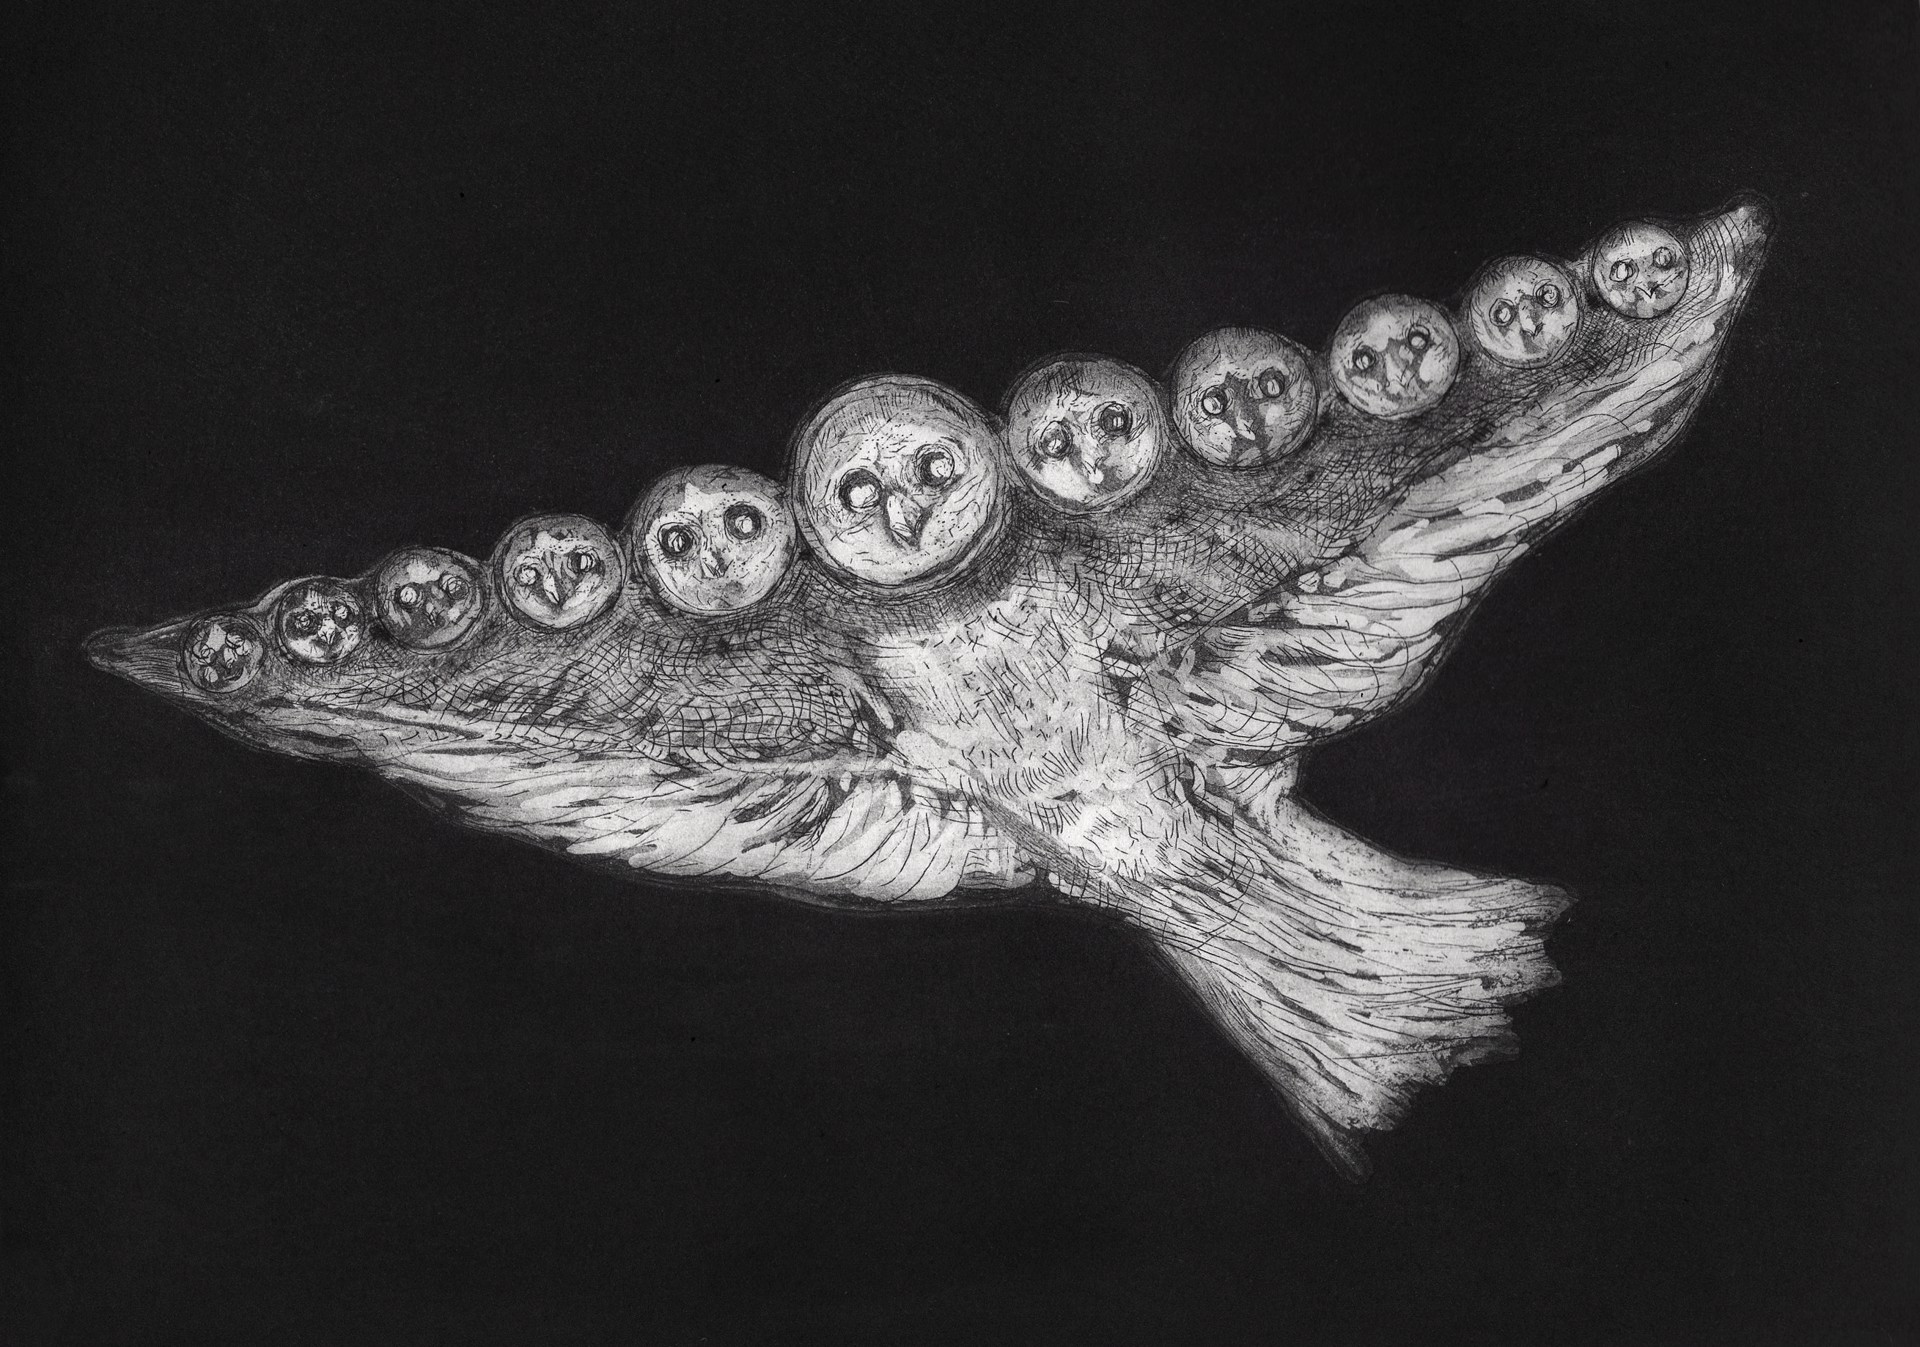 Untitled (Owl) by Alfonso Barrera